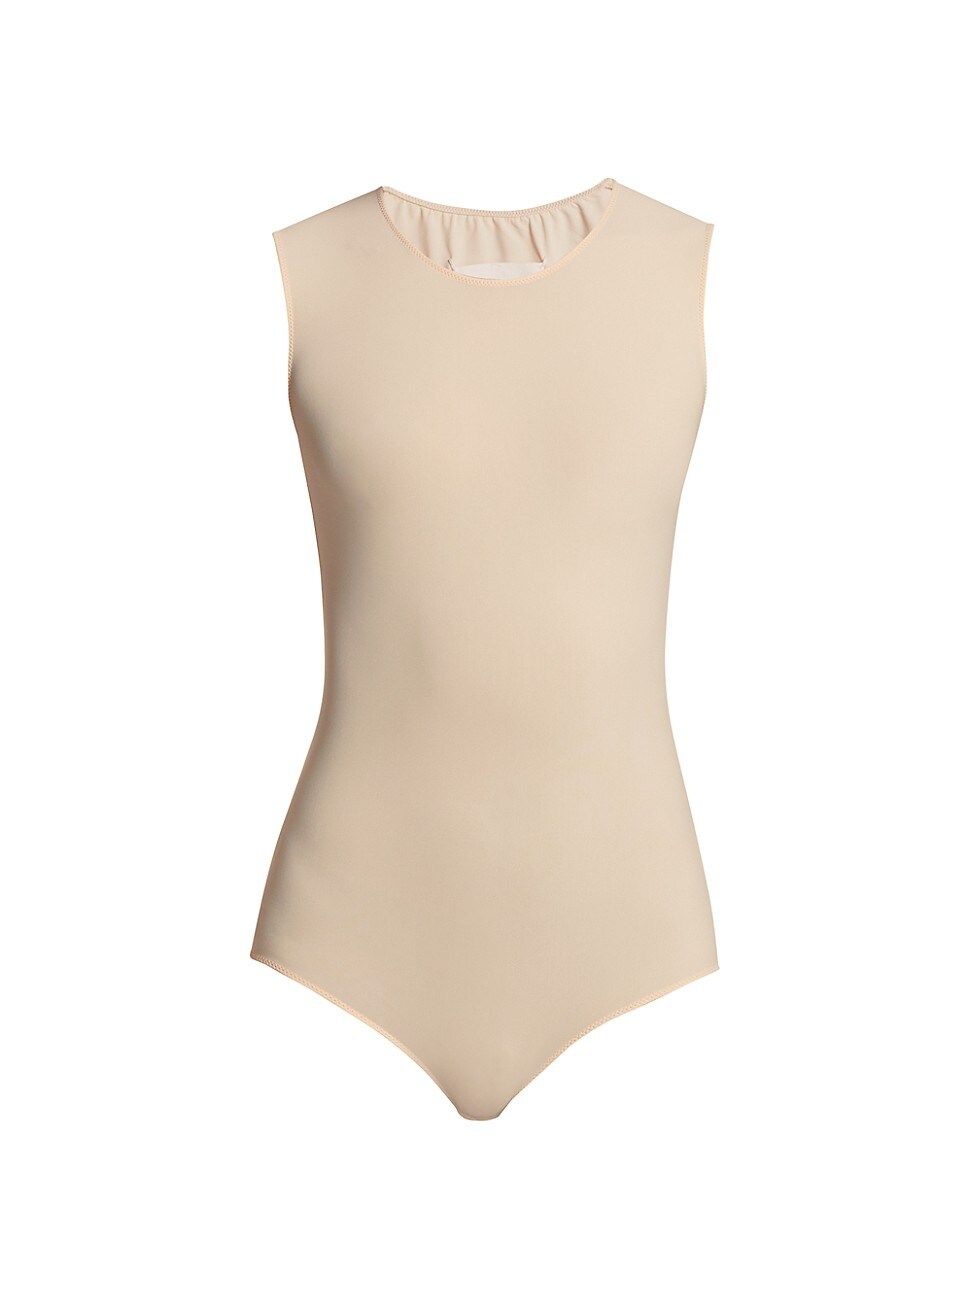 Maison Margiela Women's Sleeveless Bodysuit - Nude - Size 6 | Saks Fifth Avenue